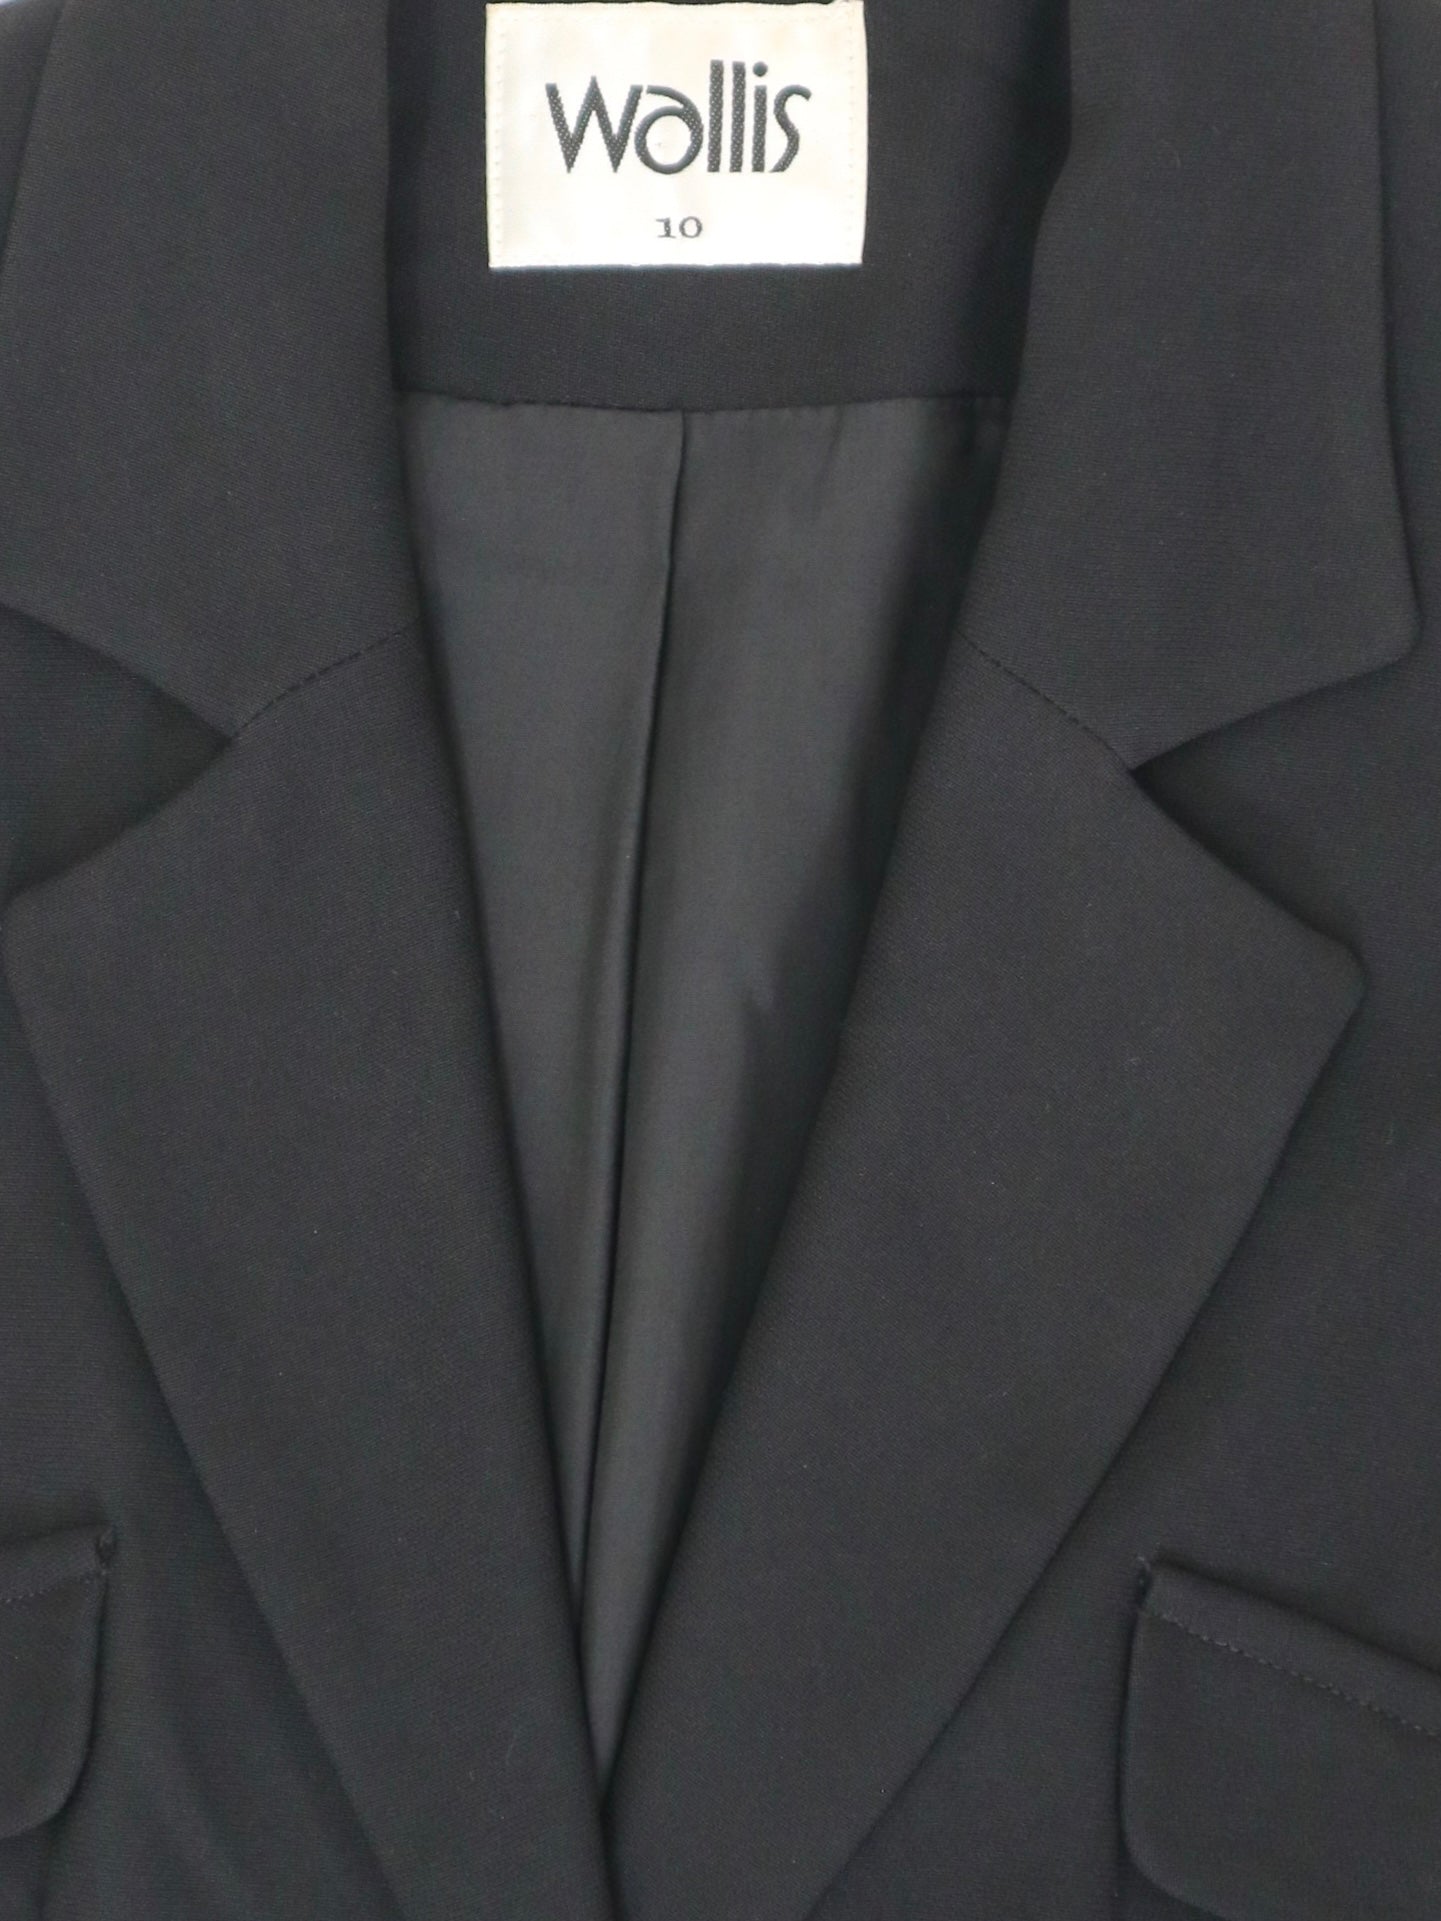 Vintage Wallis Suit Jacket